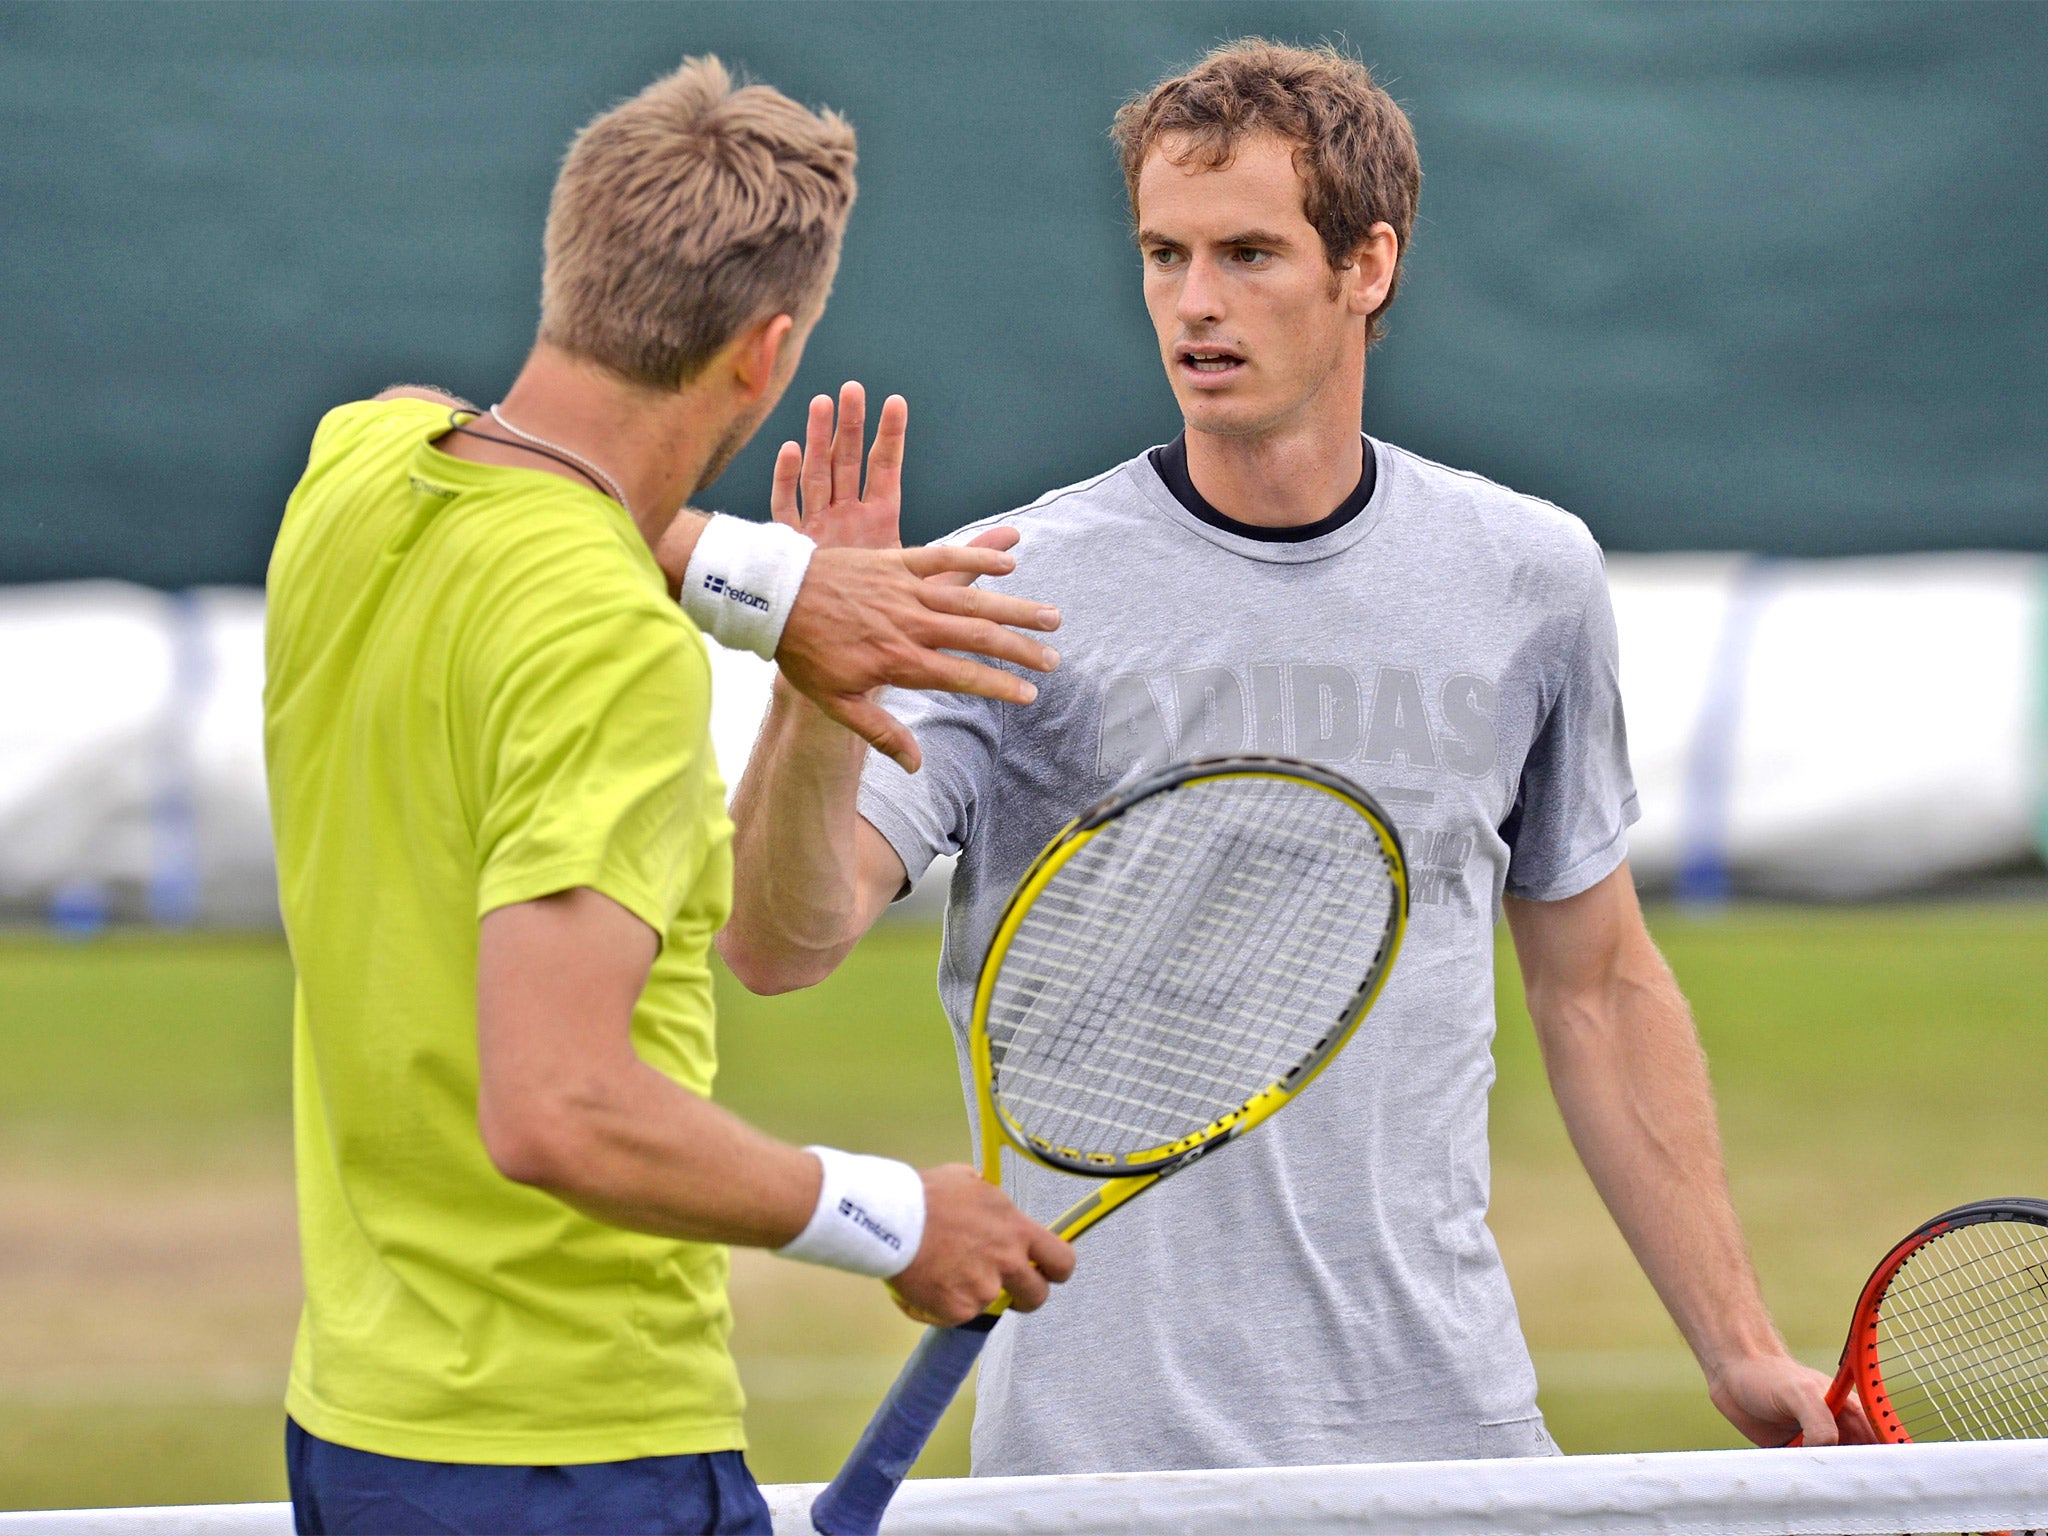 Murray practises with his training partner Johan Brunstrom